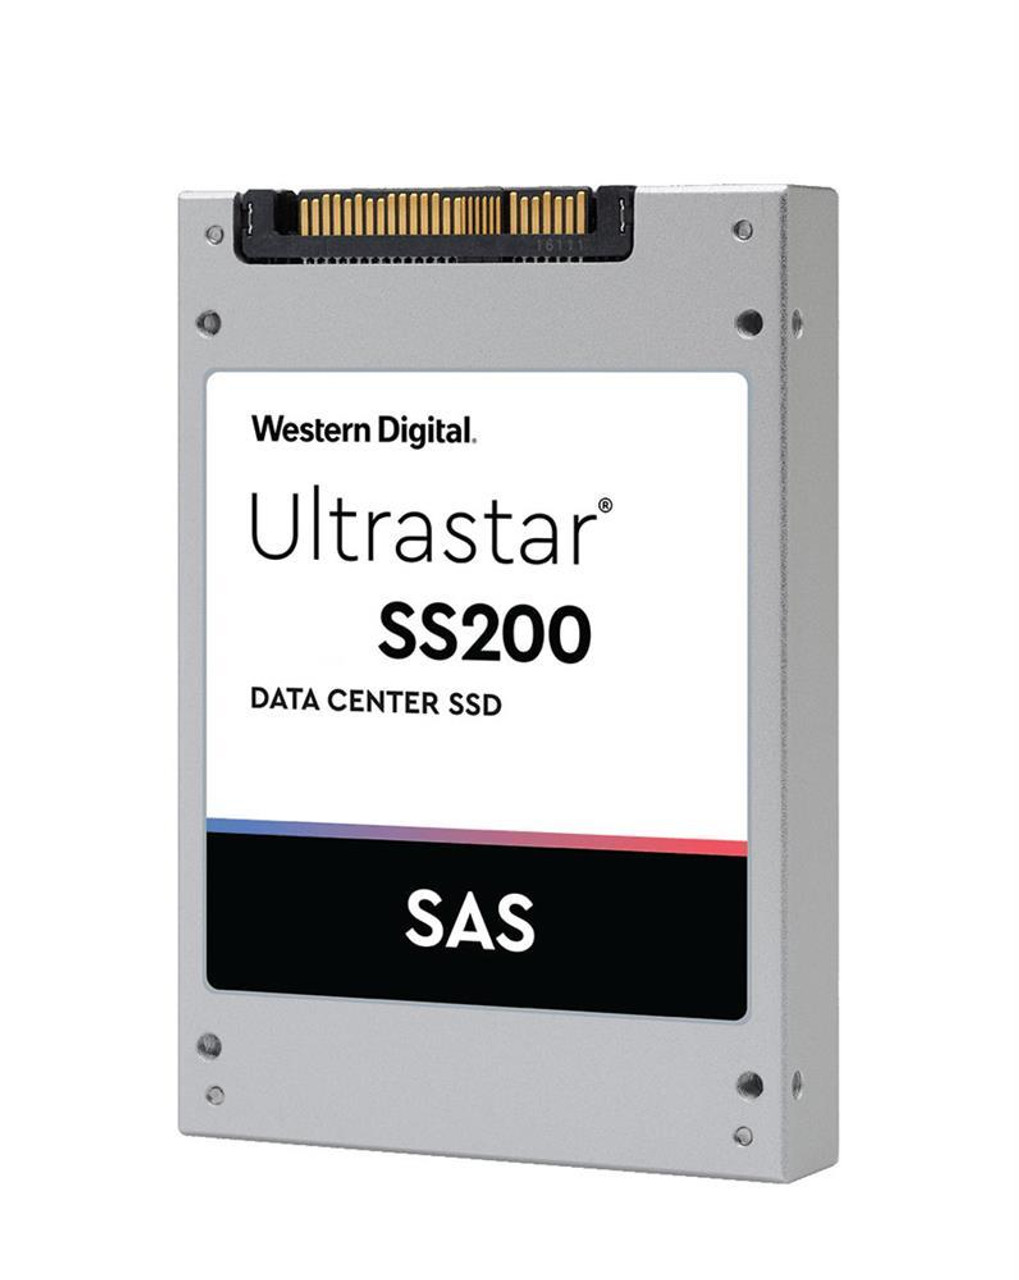 1EX1075 Western Digital Ultrastar SS200 800GB MLC SAS 12Gbps 2.5-inch Internal Solid State Drive (SSD)